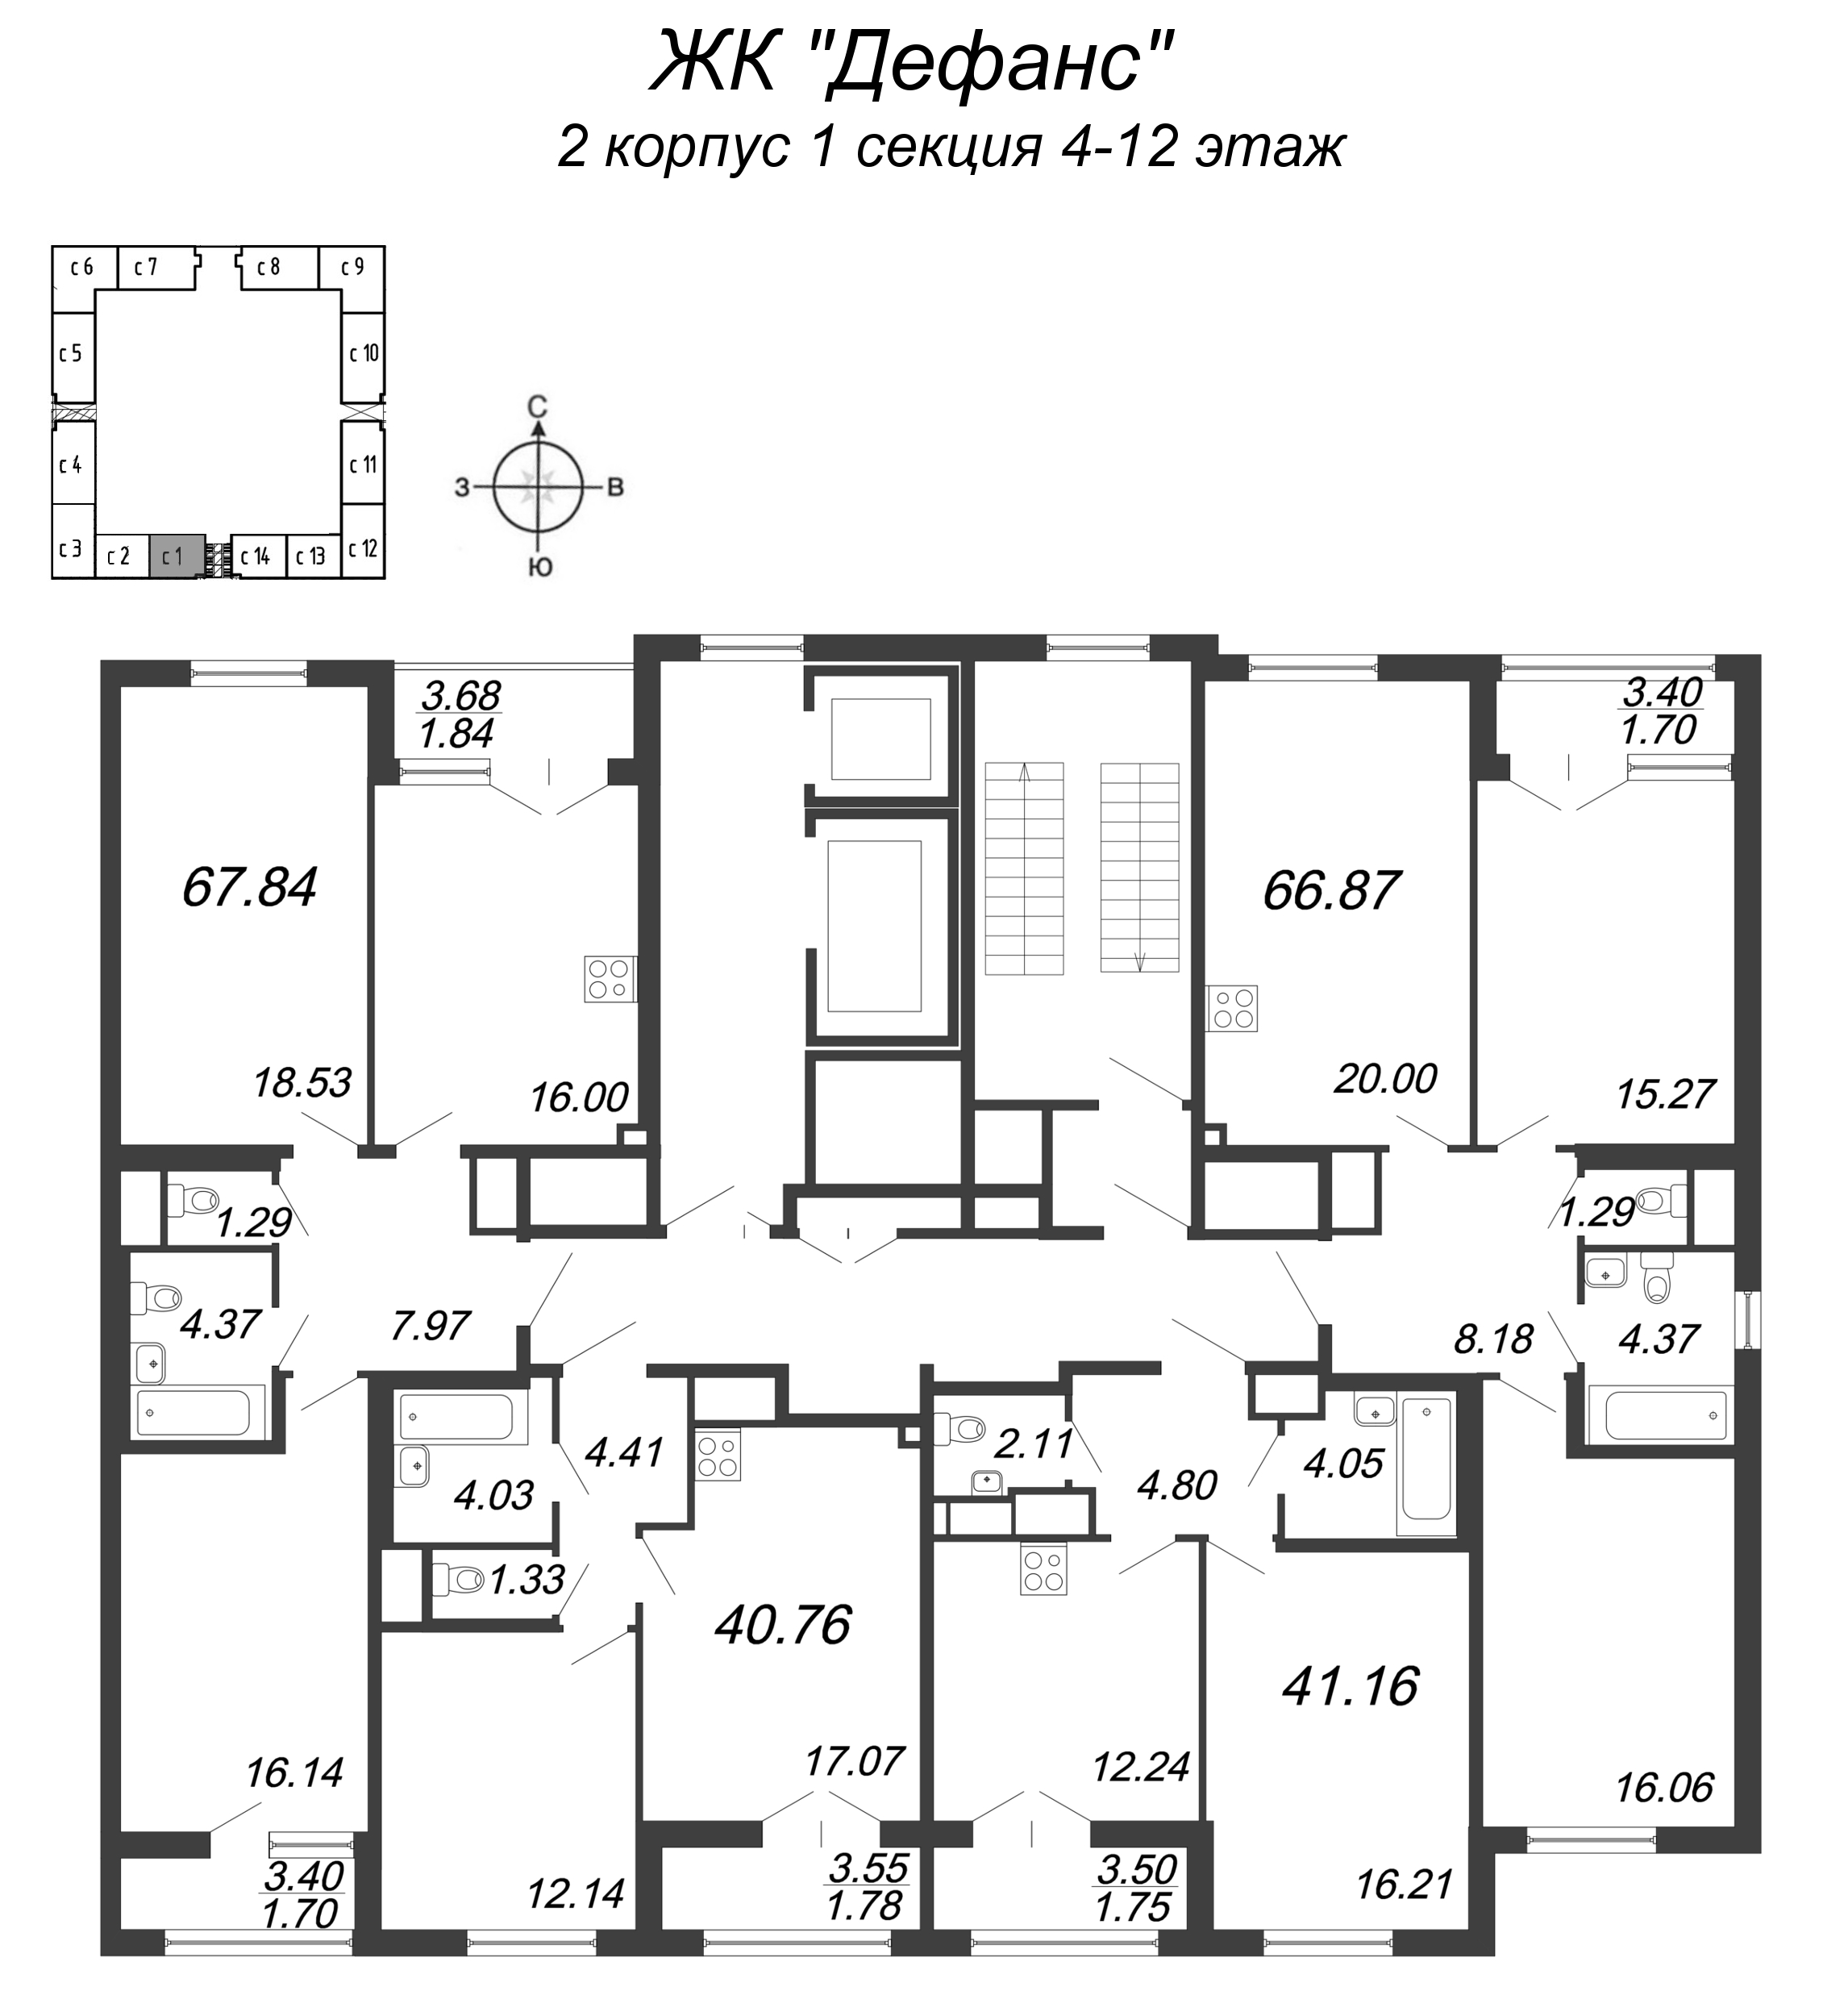 3-комнатная (Евро) квартира, 66.87 м² - планировка этажа